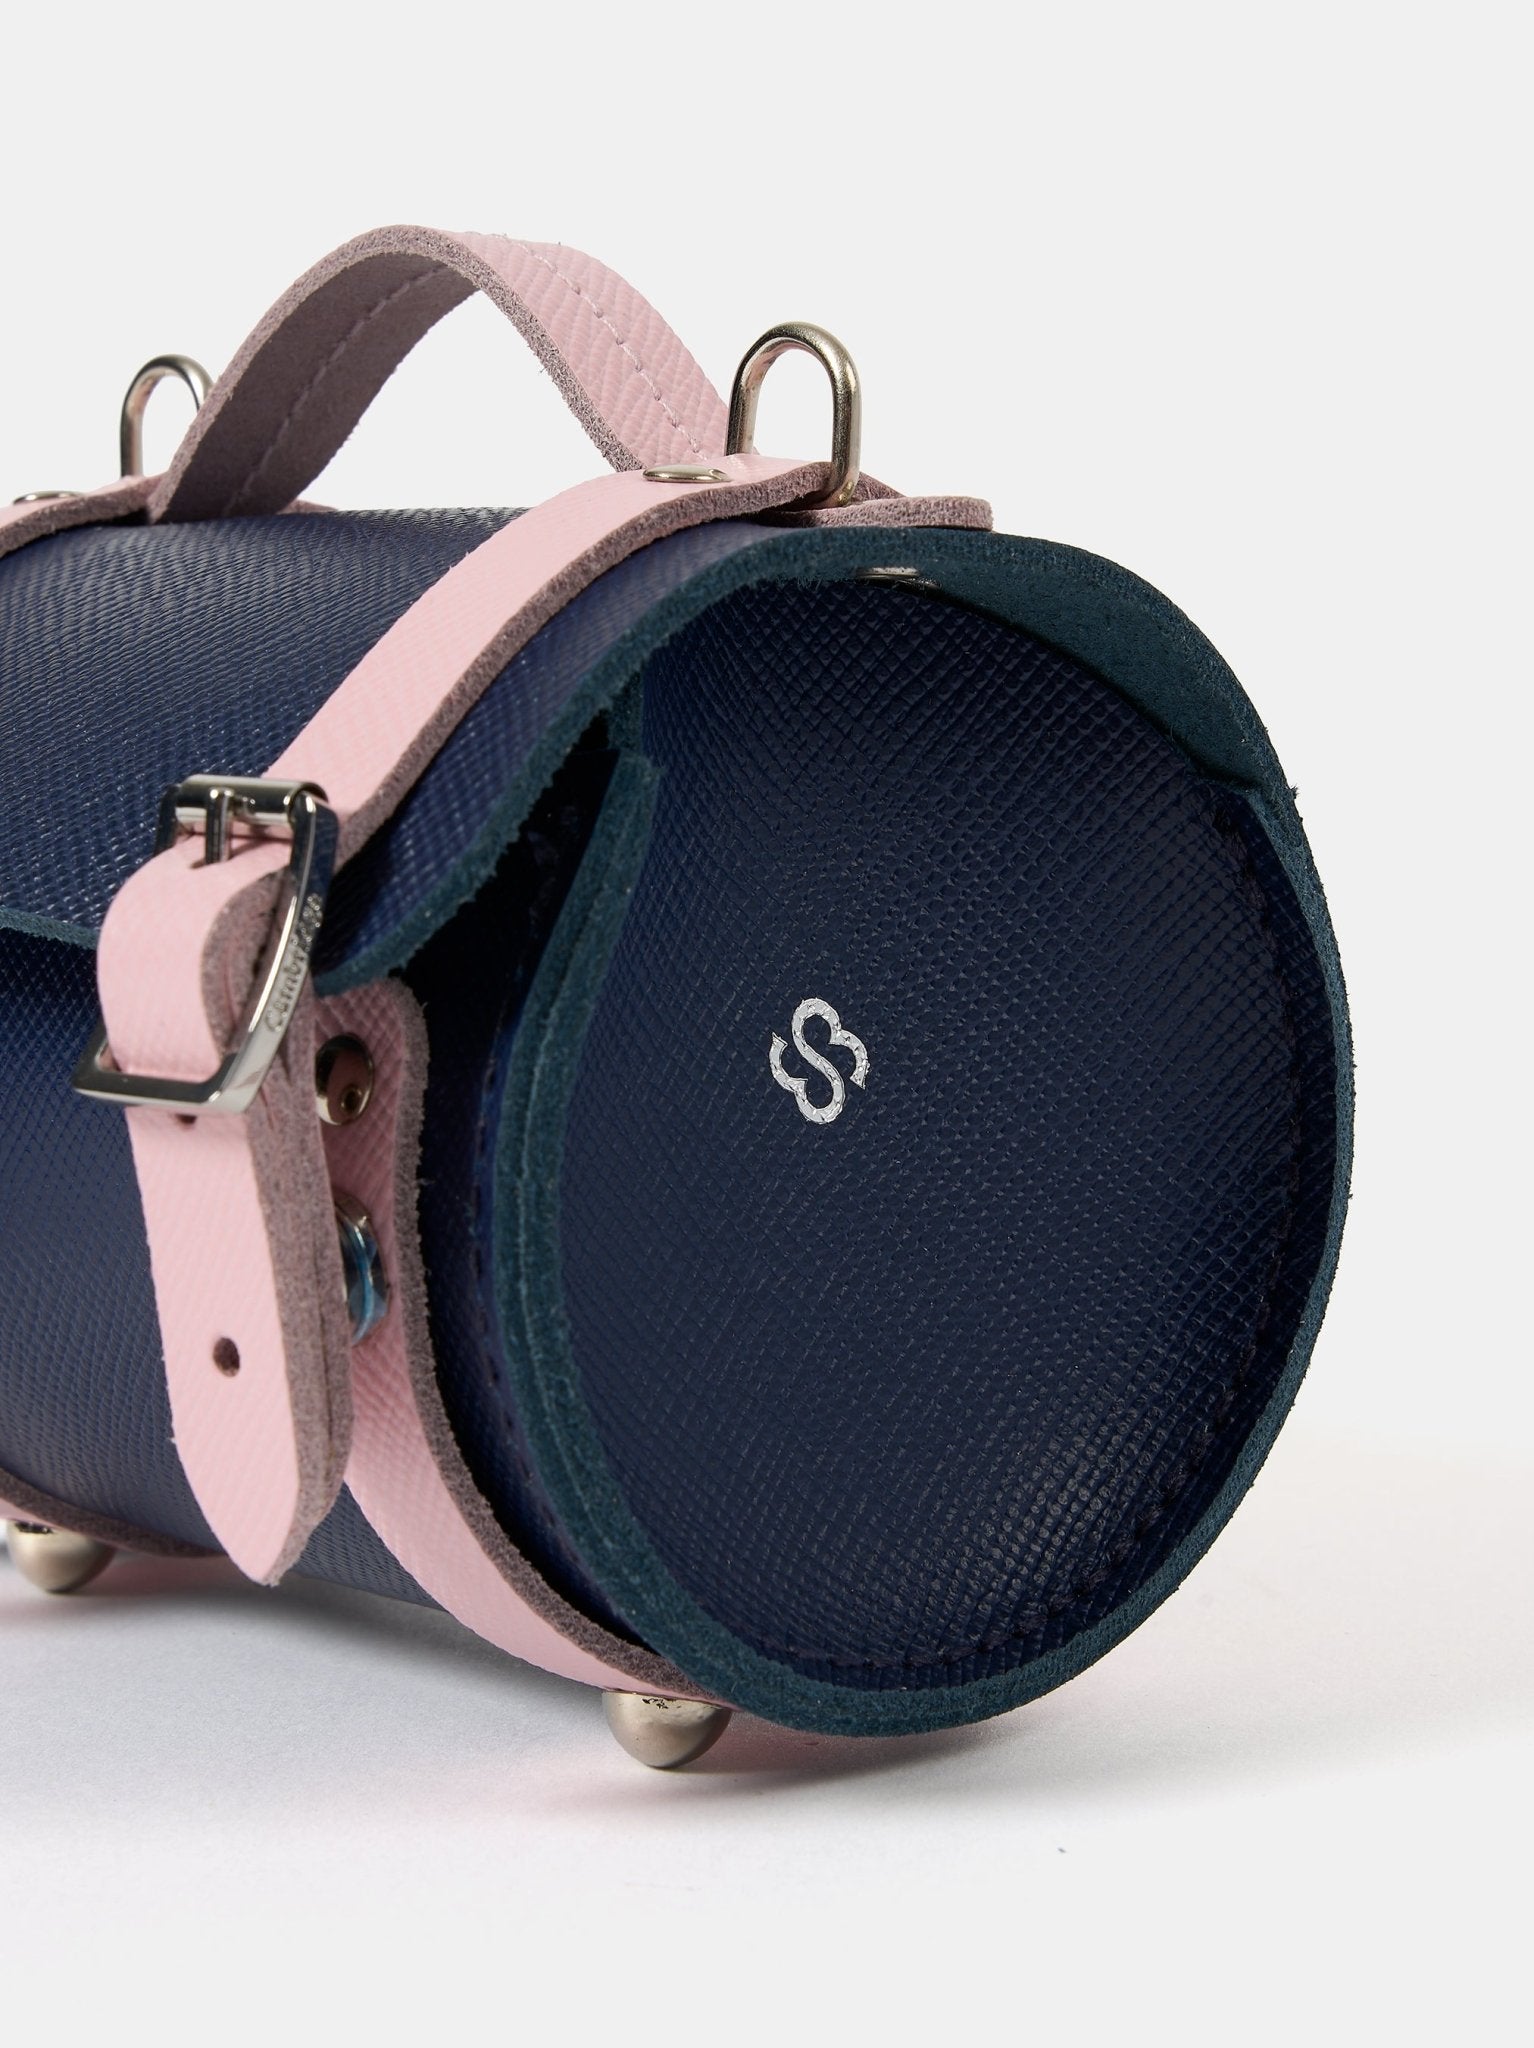 The Micro Bowls Bag - Blueberry and Fondant Pink Saffiano - Cambridge Satchel